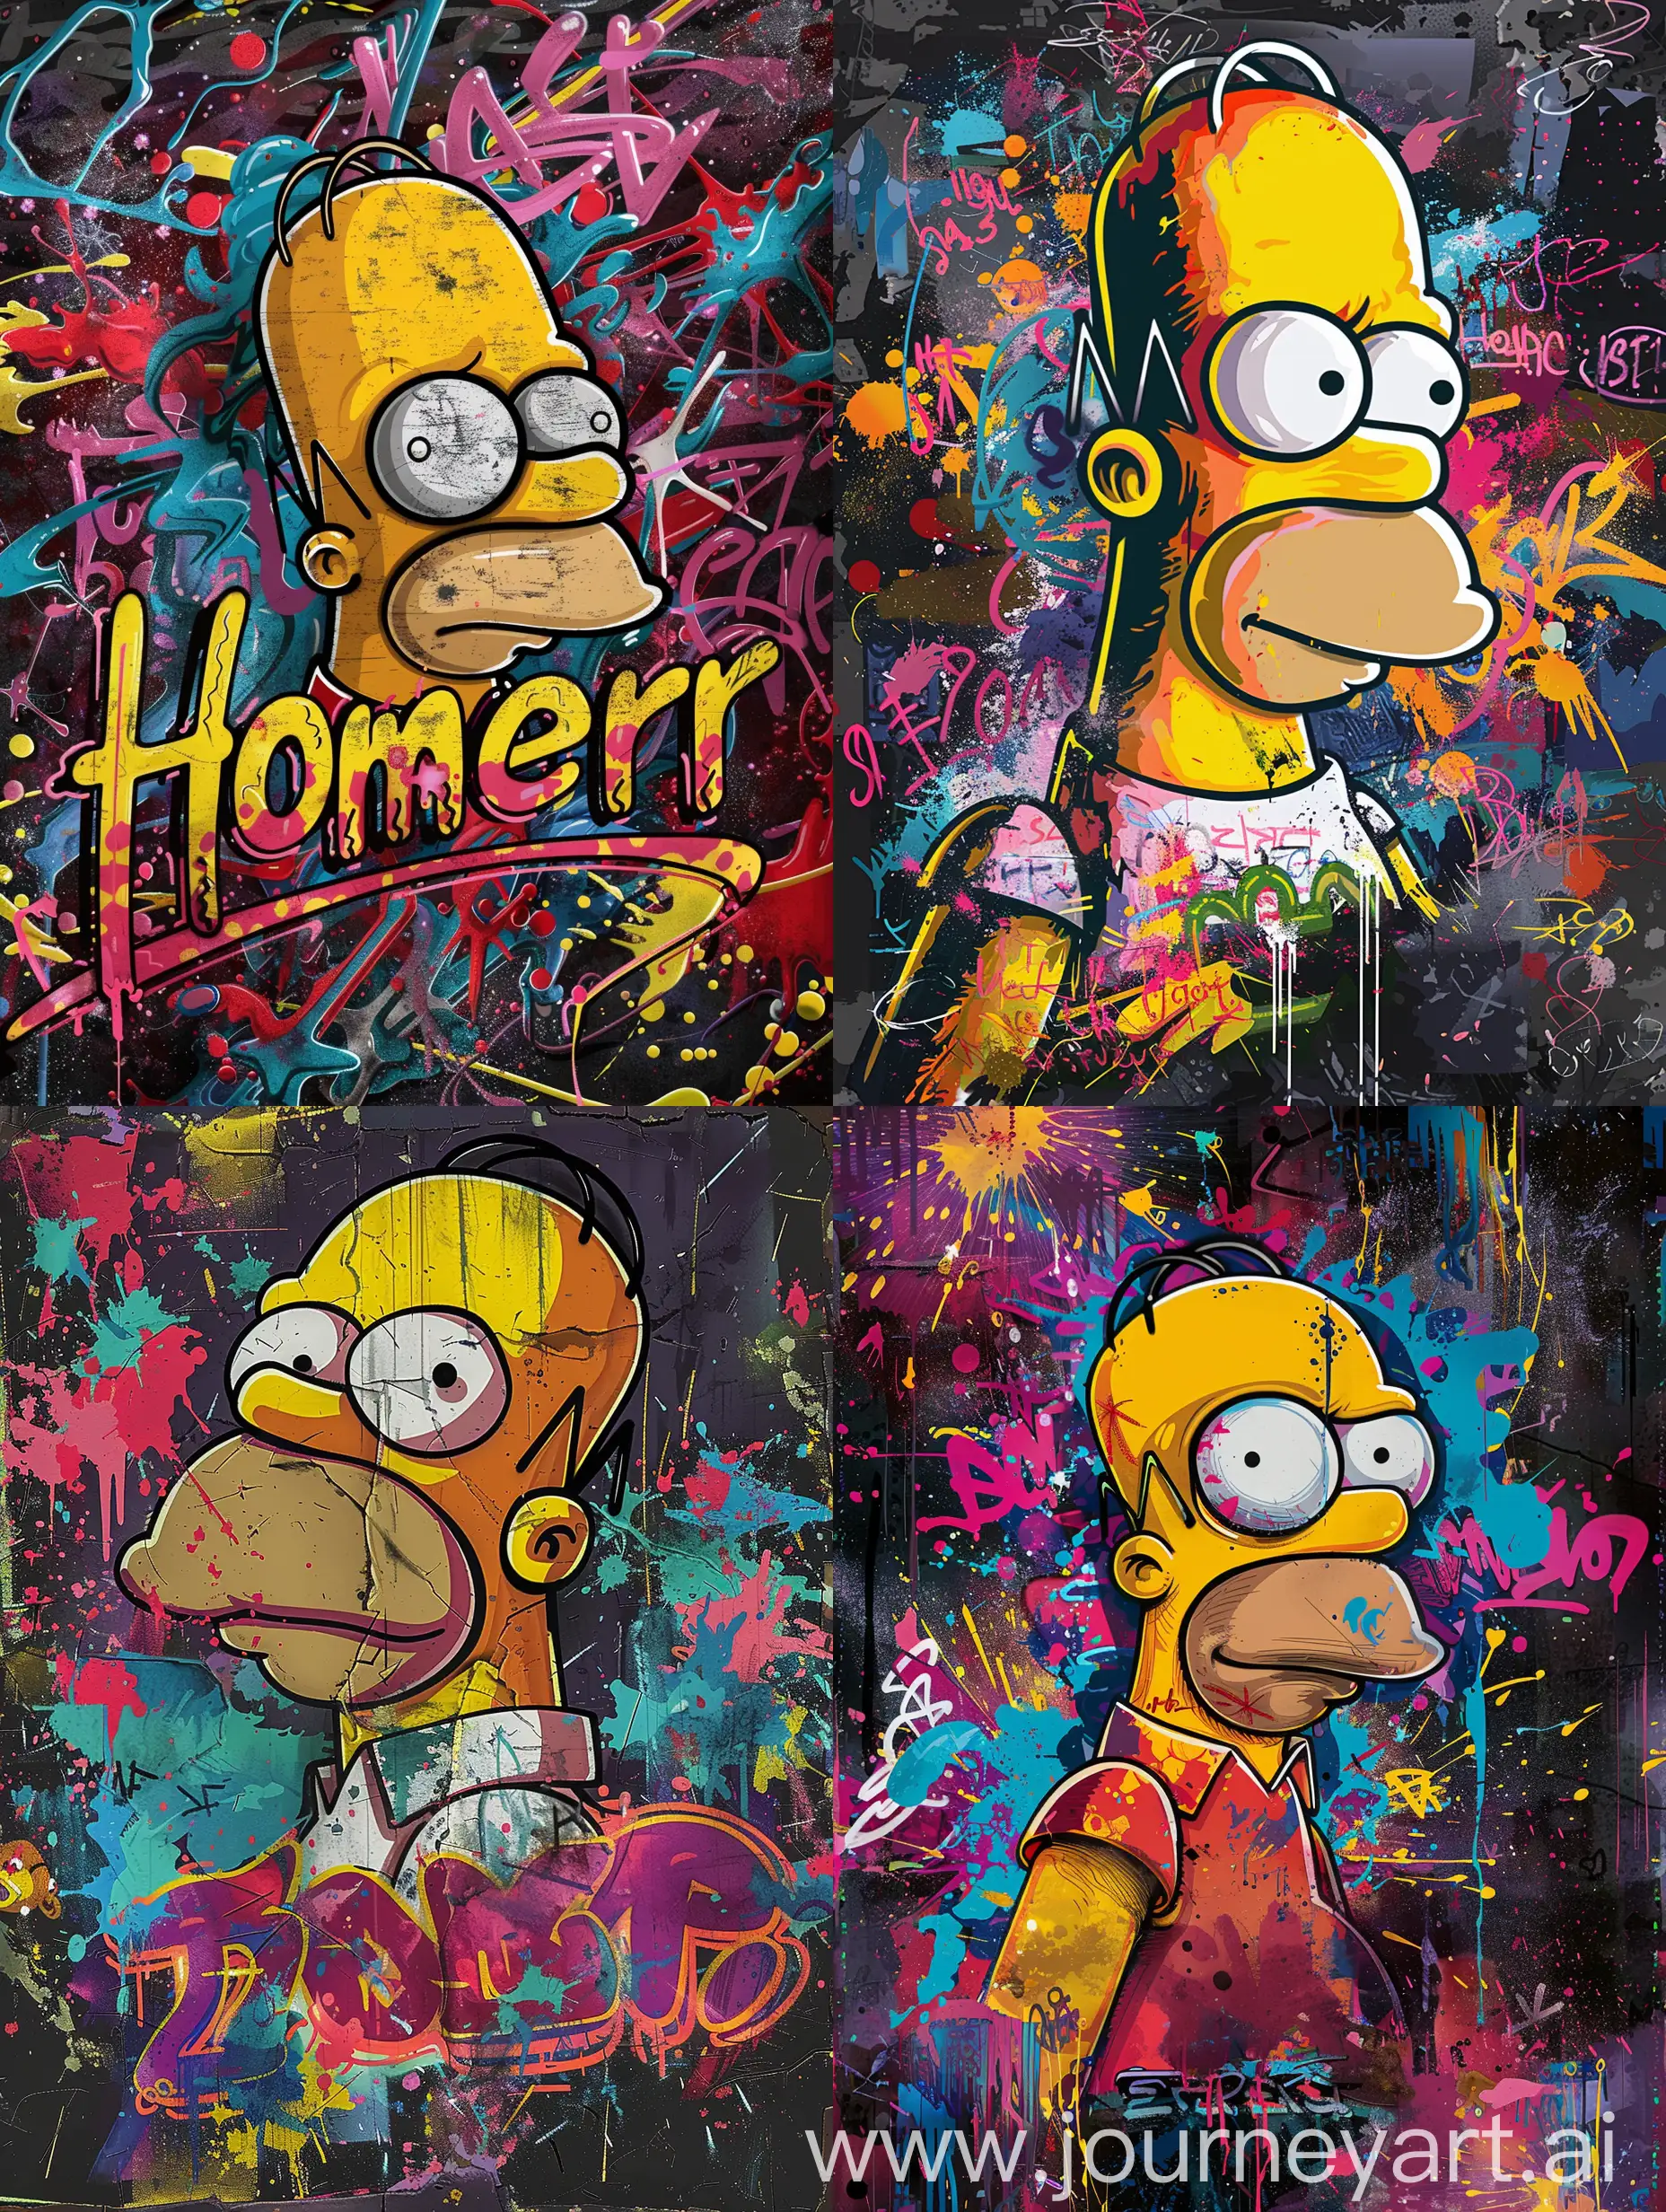 Vibrant-Urban-Graffiti-Portrait-of-Homer-Simpson-on-Canvas